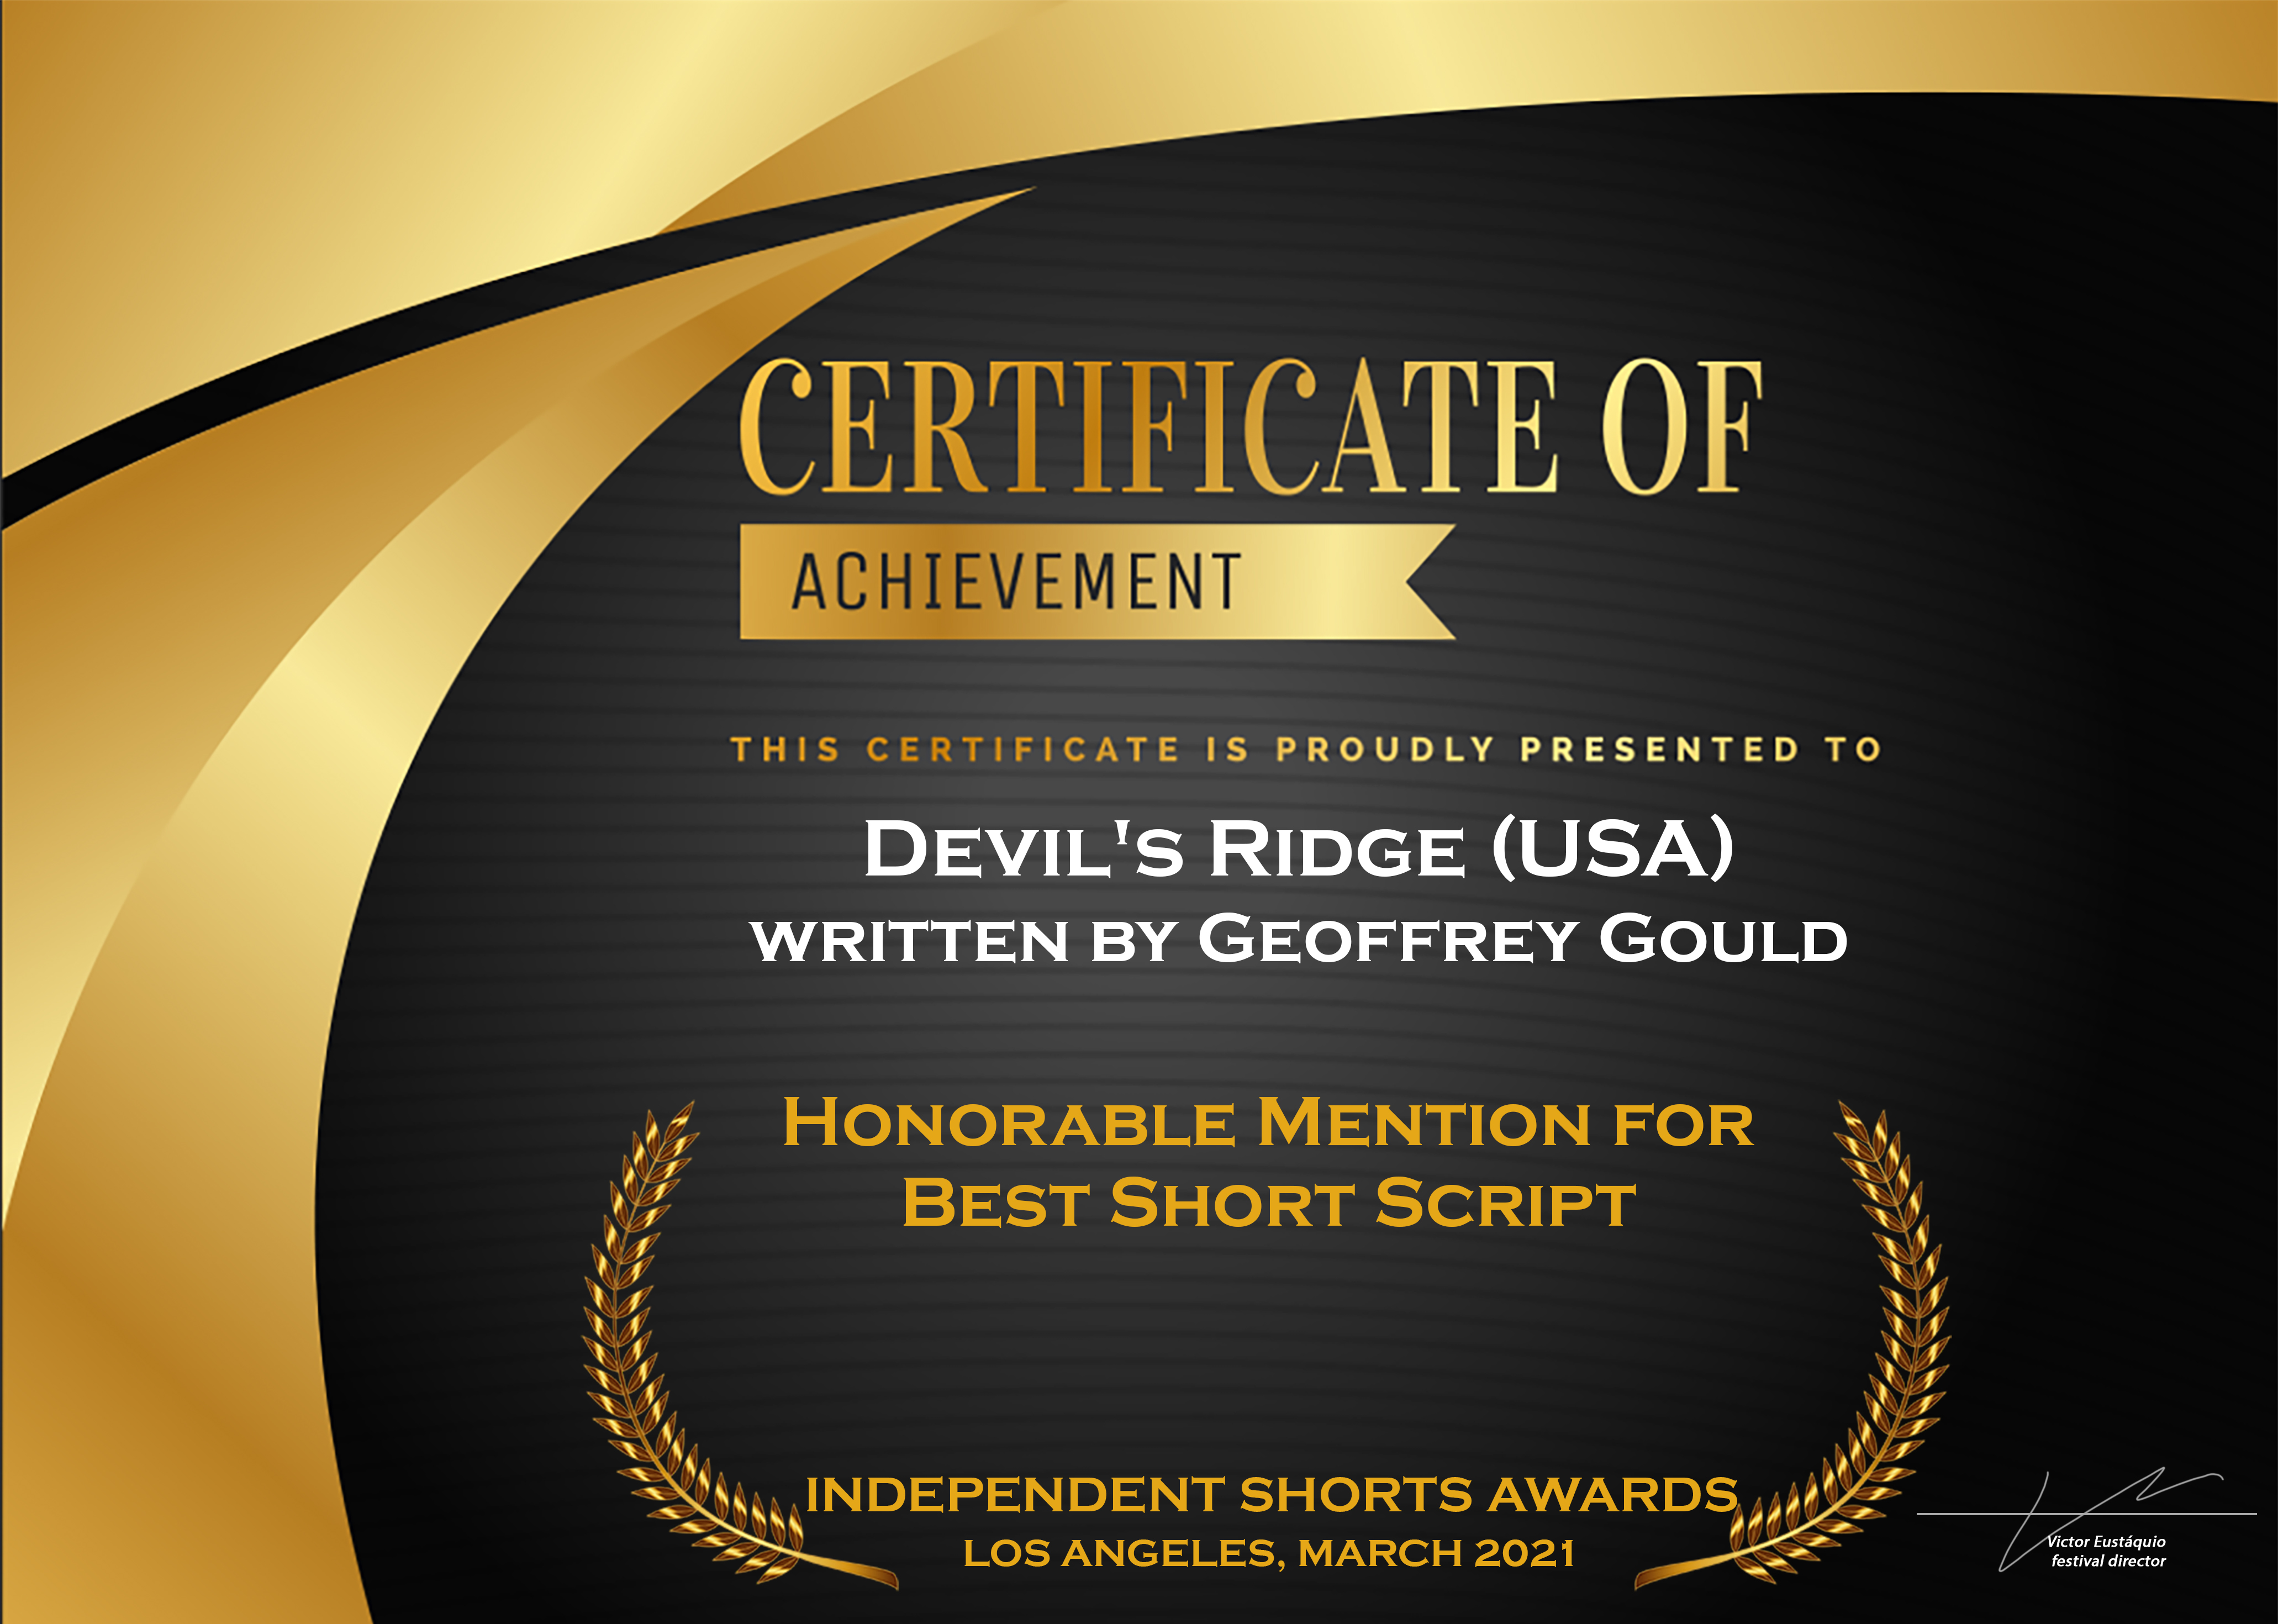 Devil's Ridge Win Certificate, Independent Shorts Awards